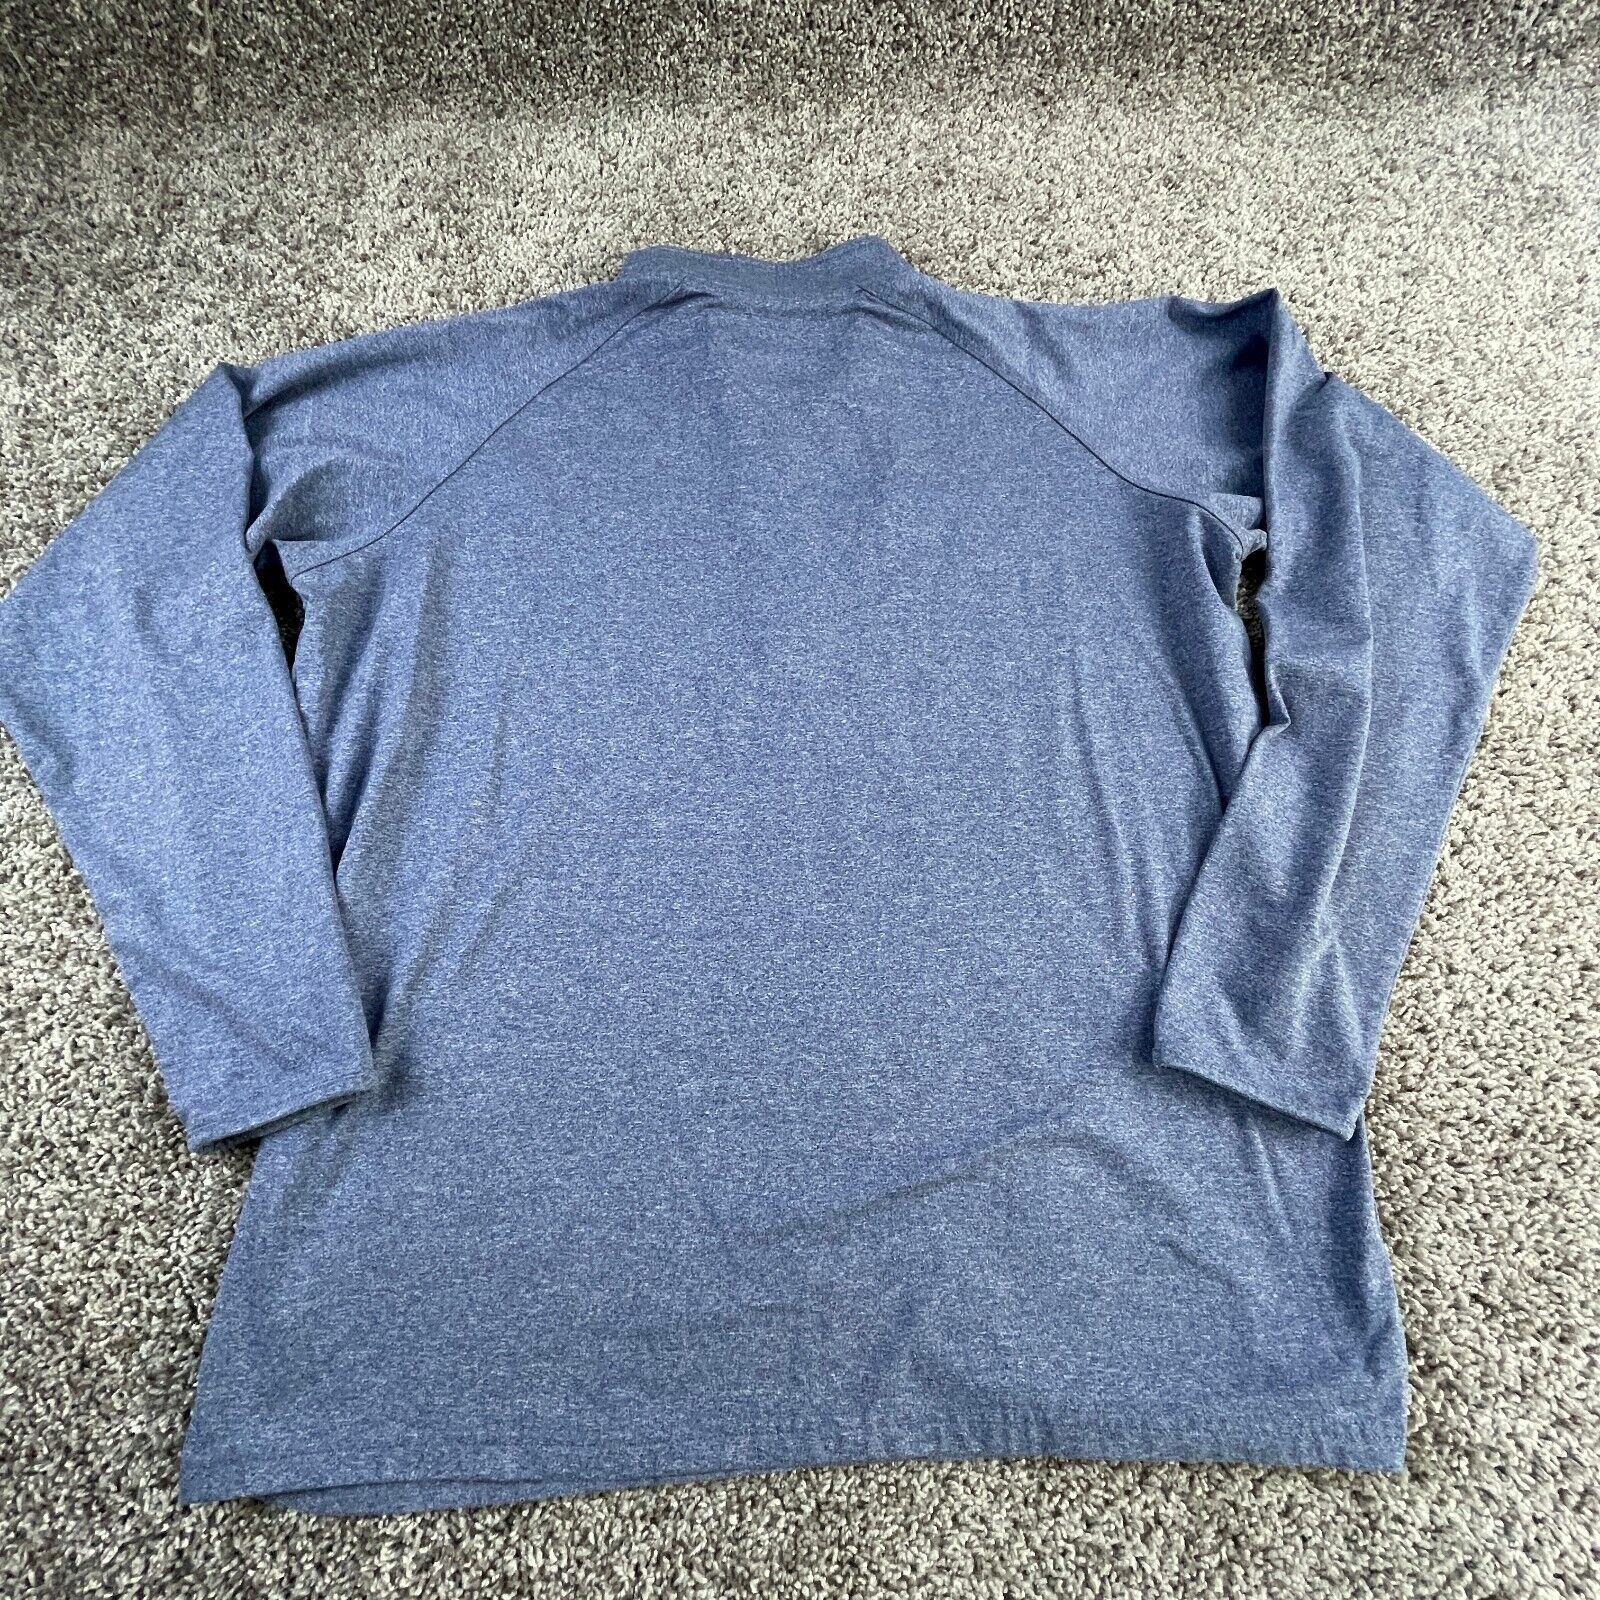 Roush Yates Sweater Adult Large Blue Sweatshirt Ford Zip Pullover Mens ...